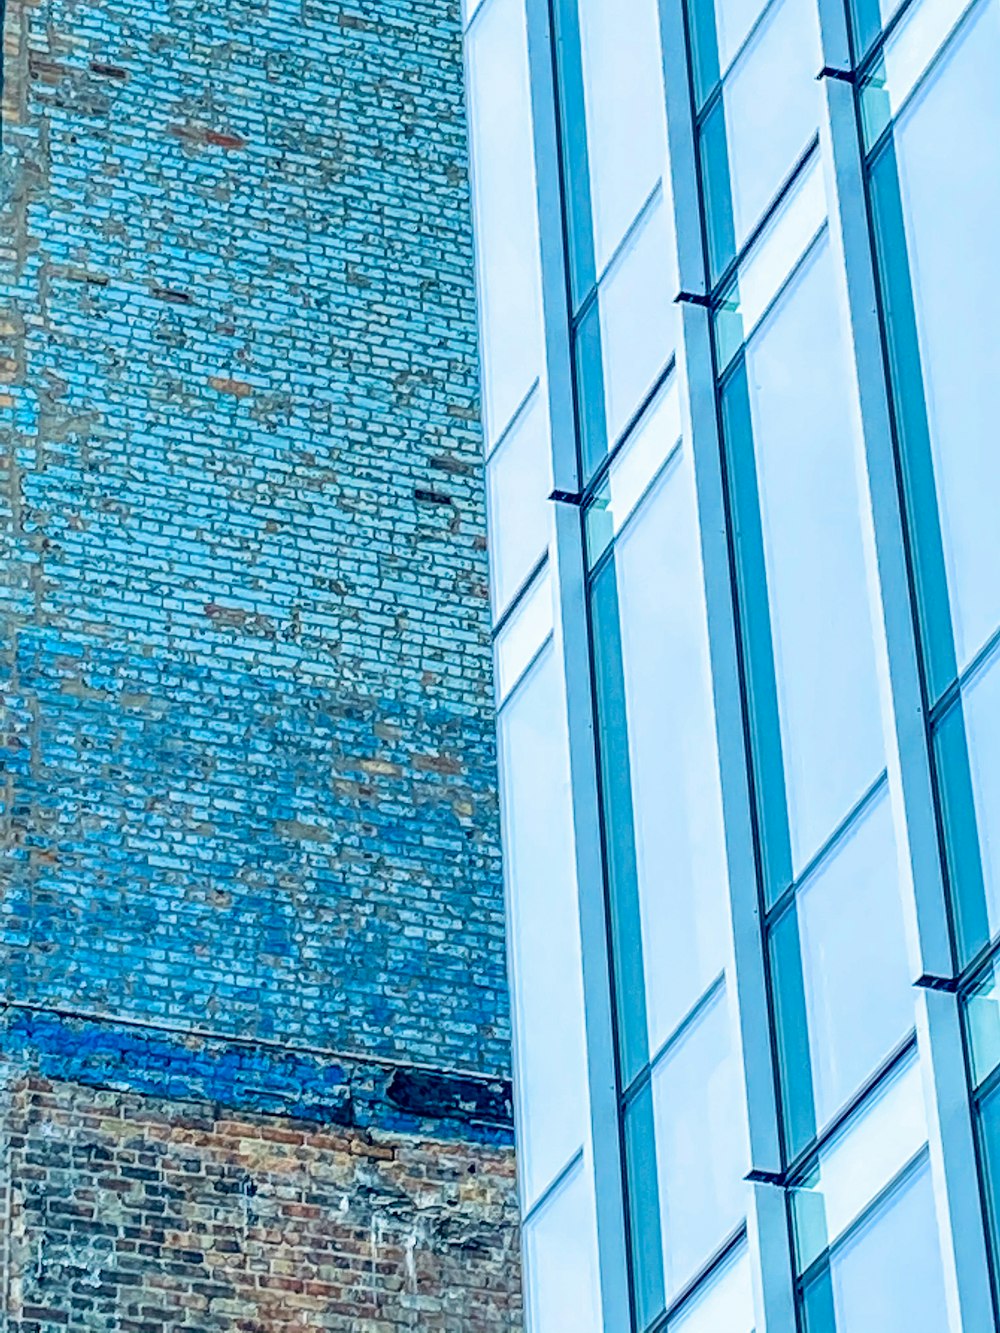 blue and brown brick wall